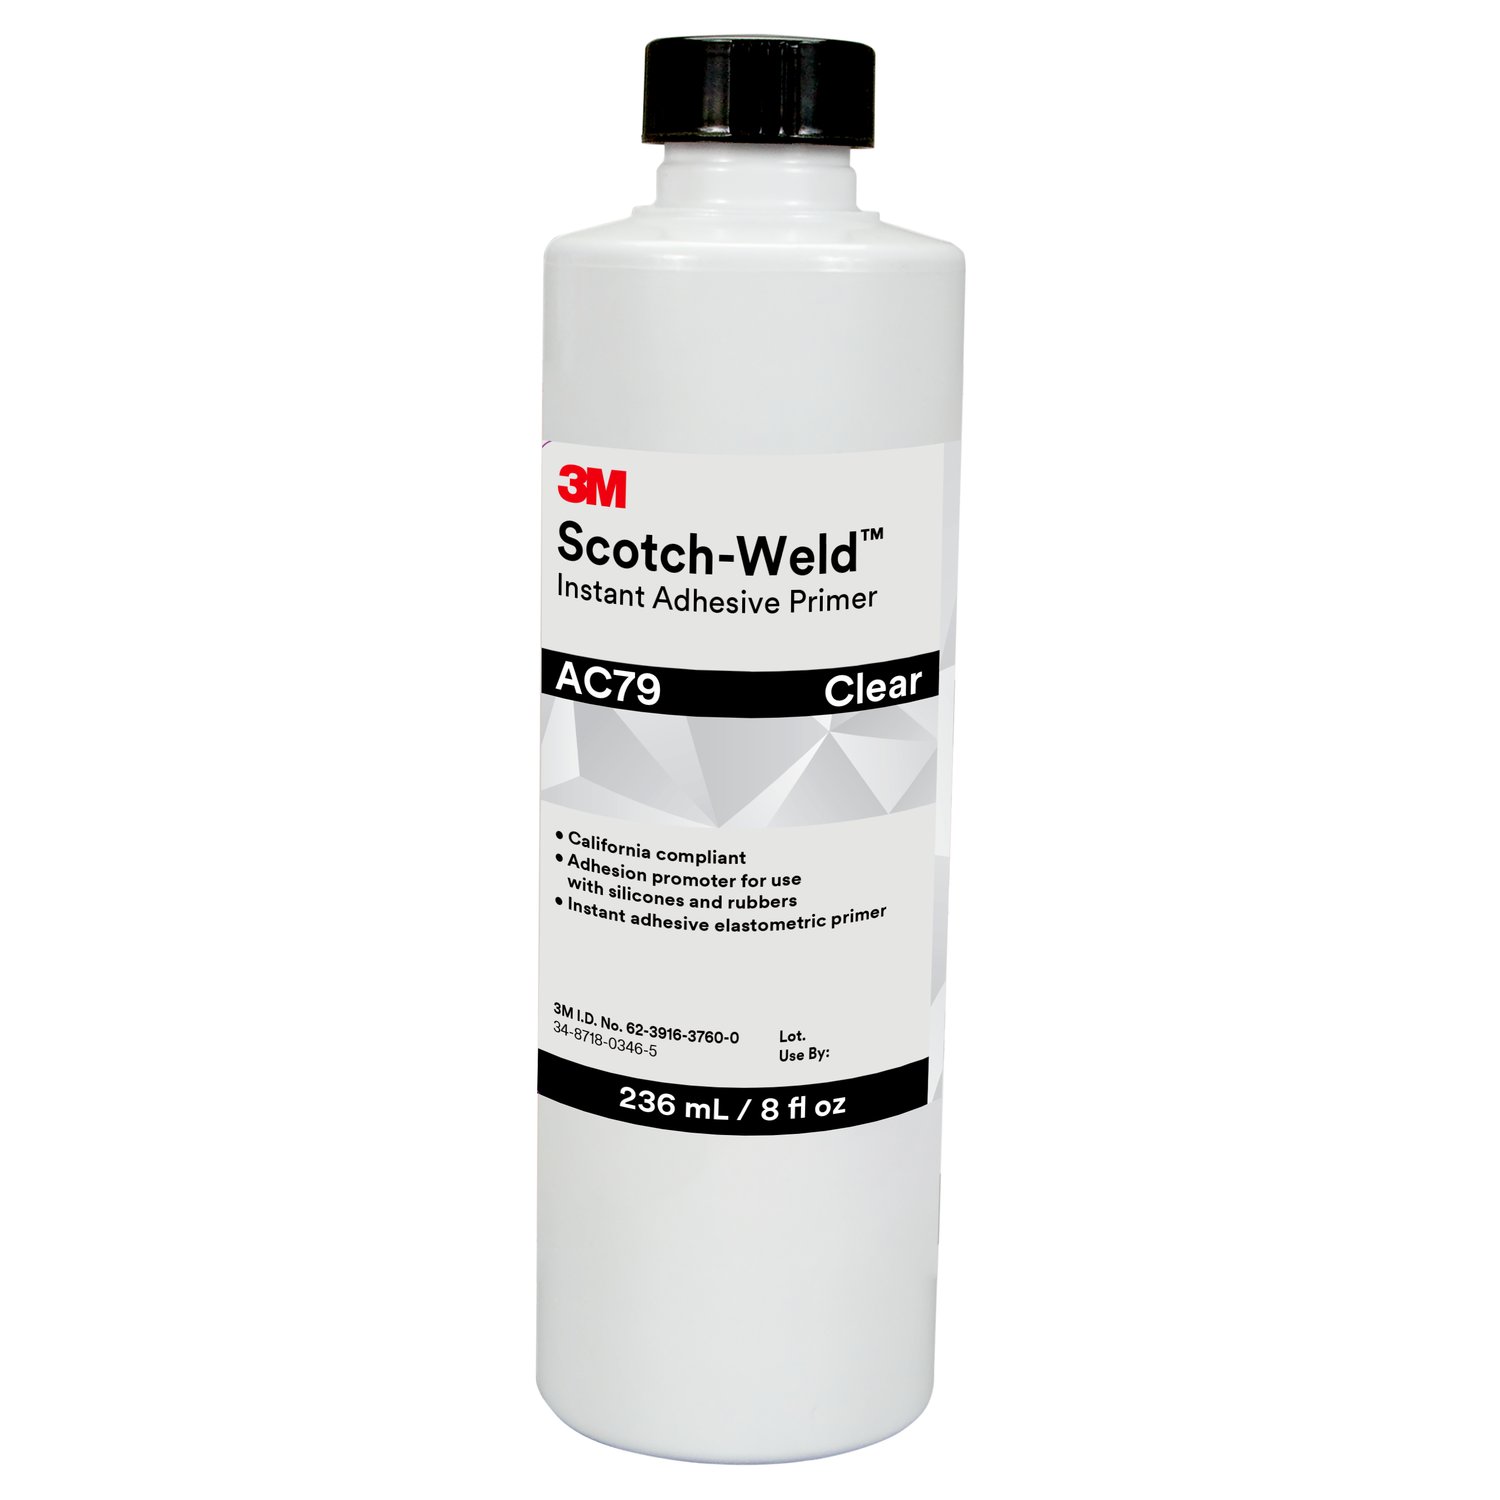 7100039264 - 3M Scotch-Weld Instant Adhesive Primer AC79, Clear, 8 fl o, 4
Bottles/Case